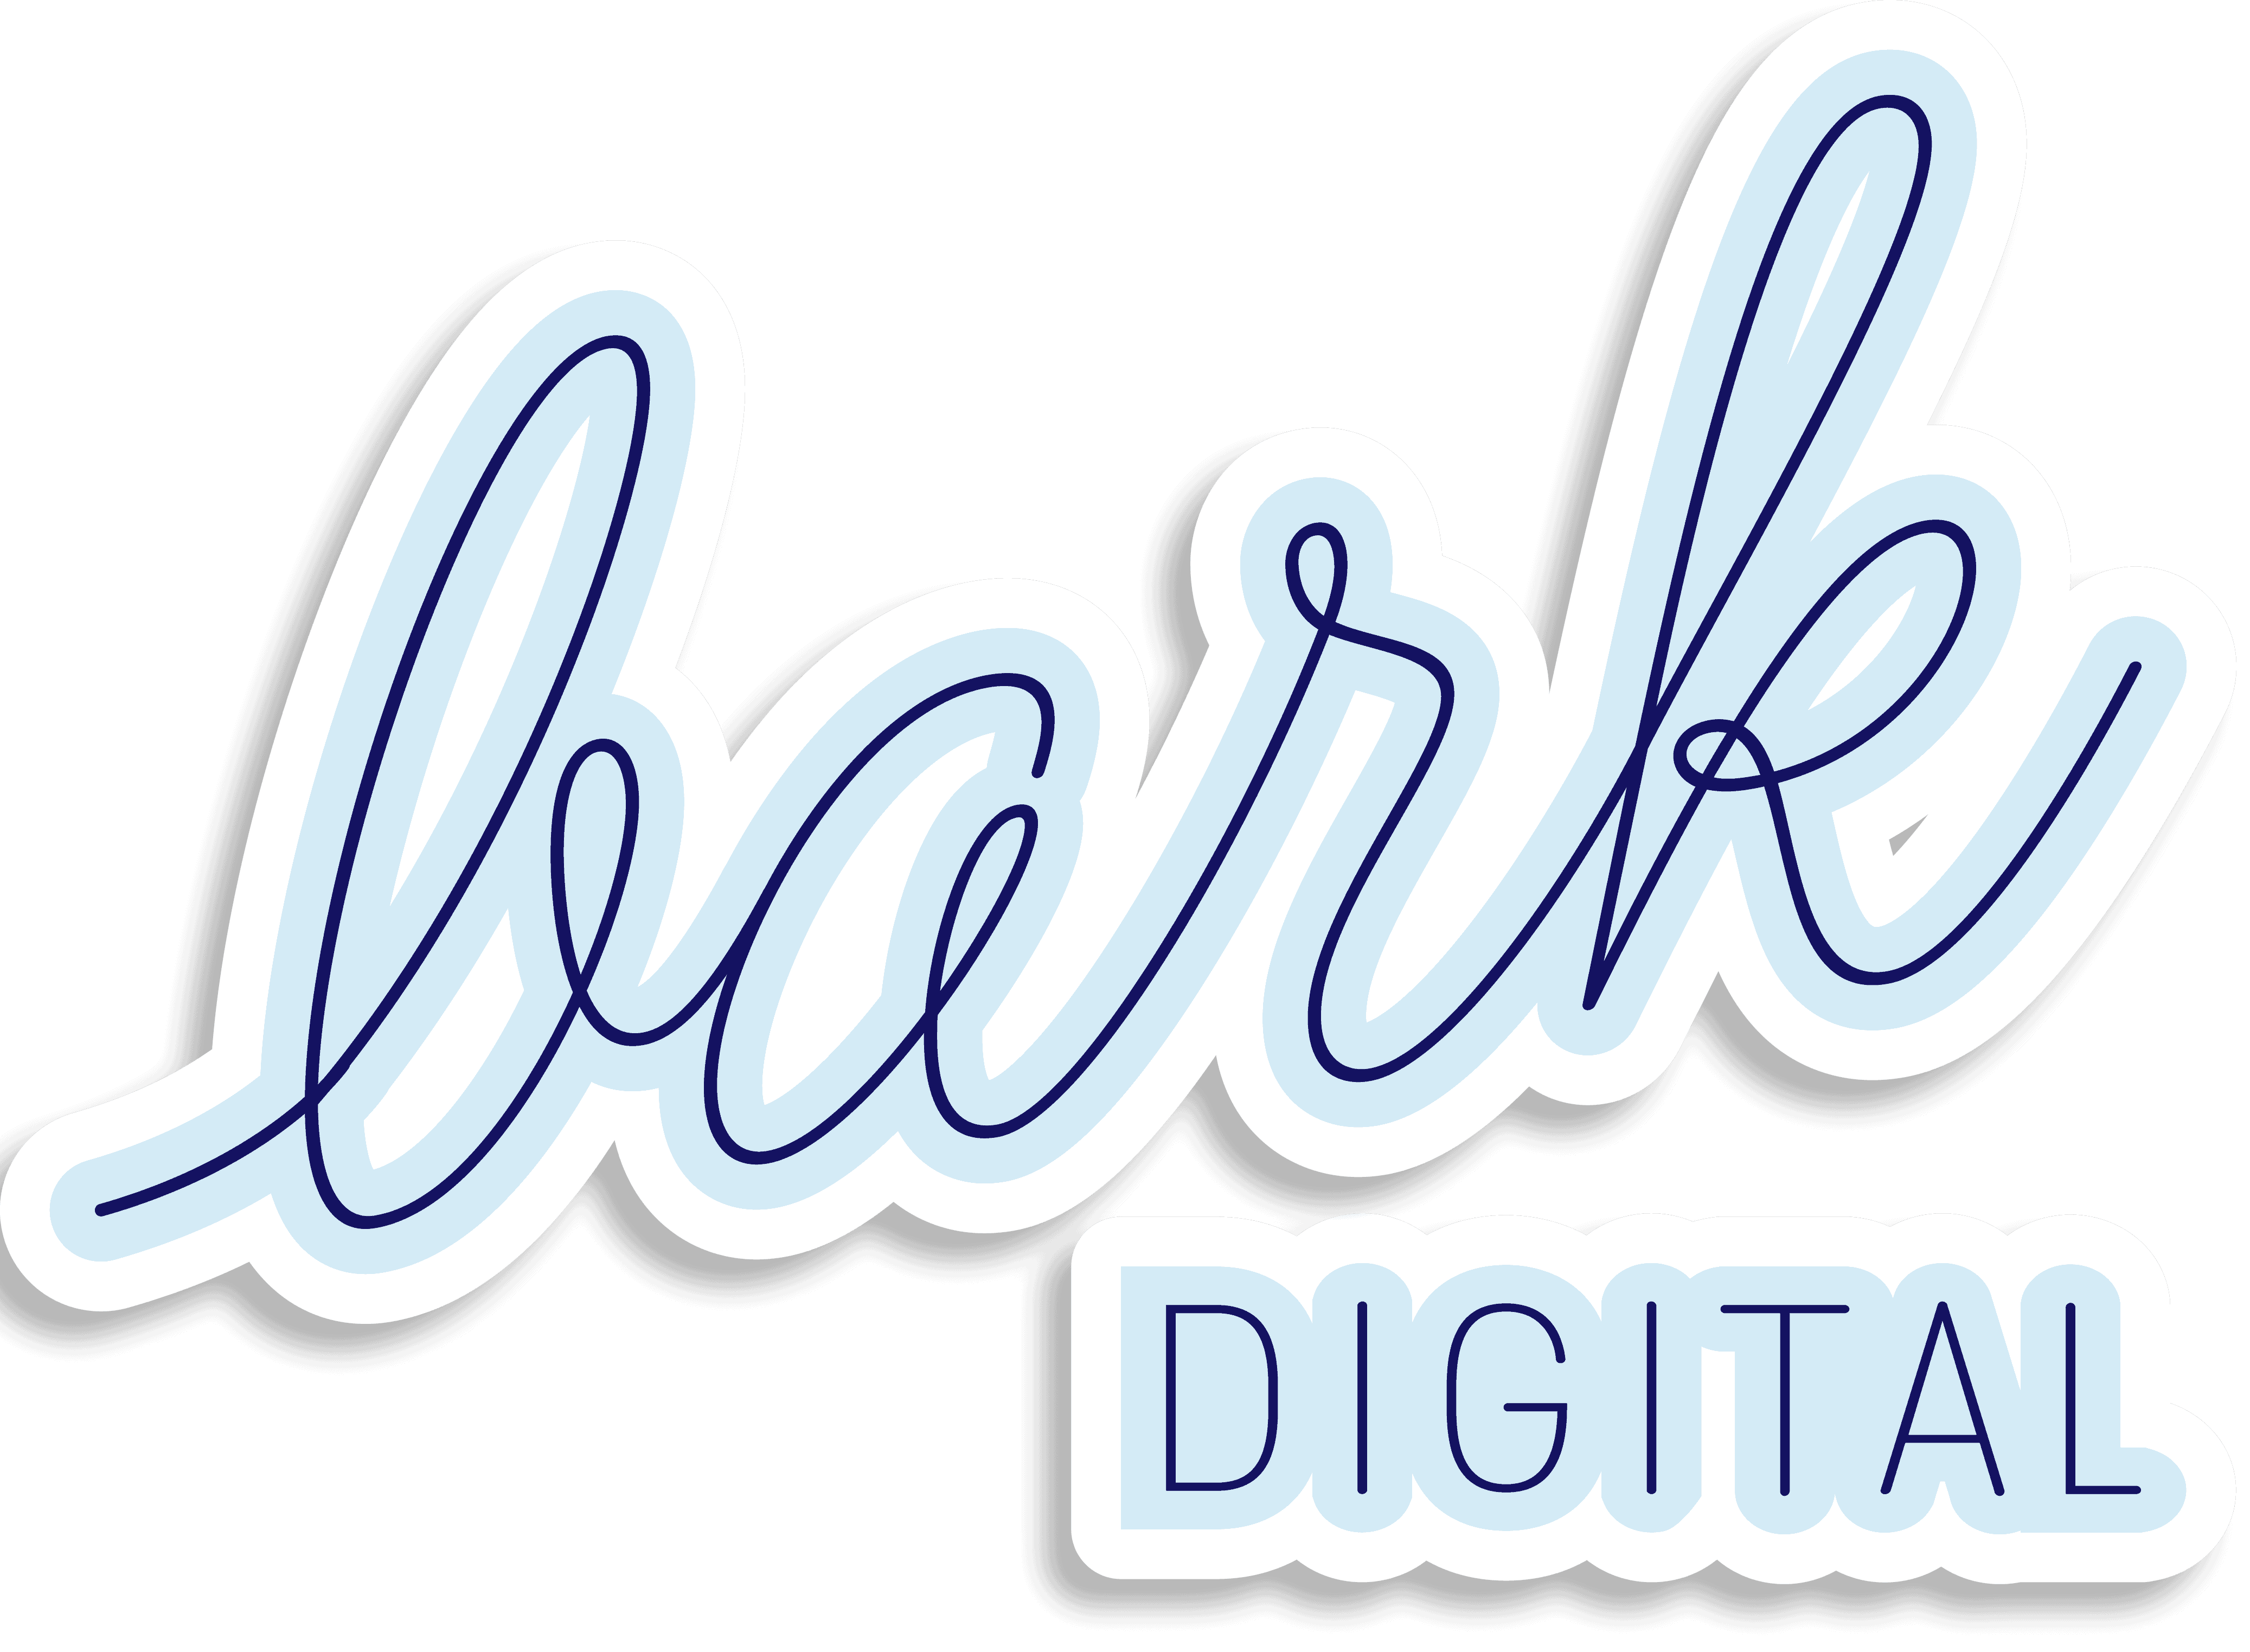 Bark digital logo on a black background.